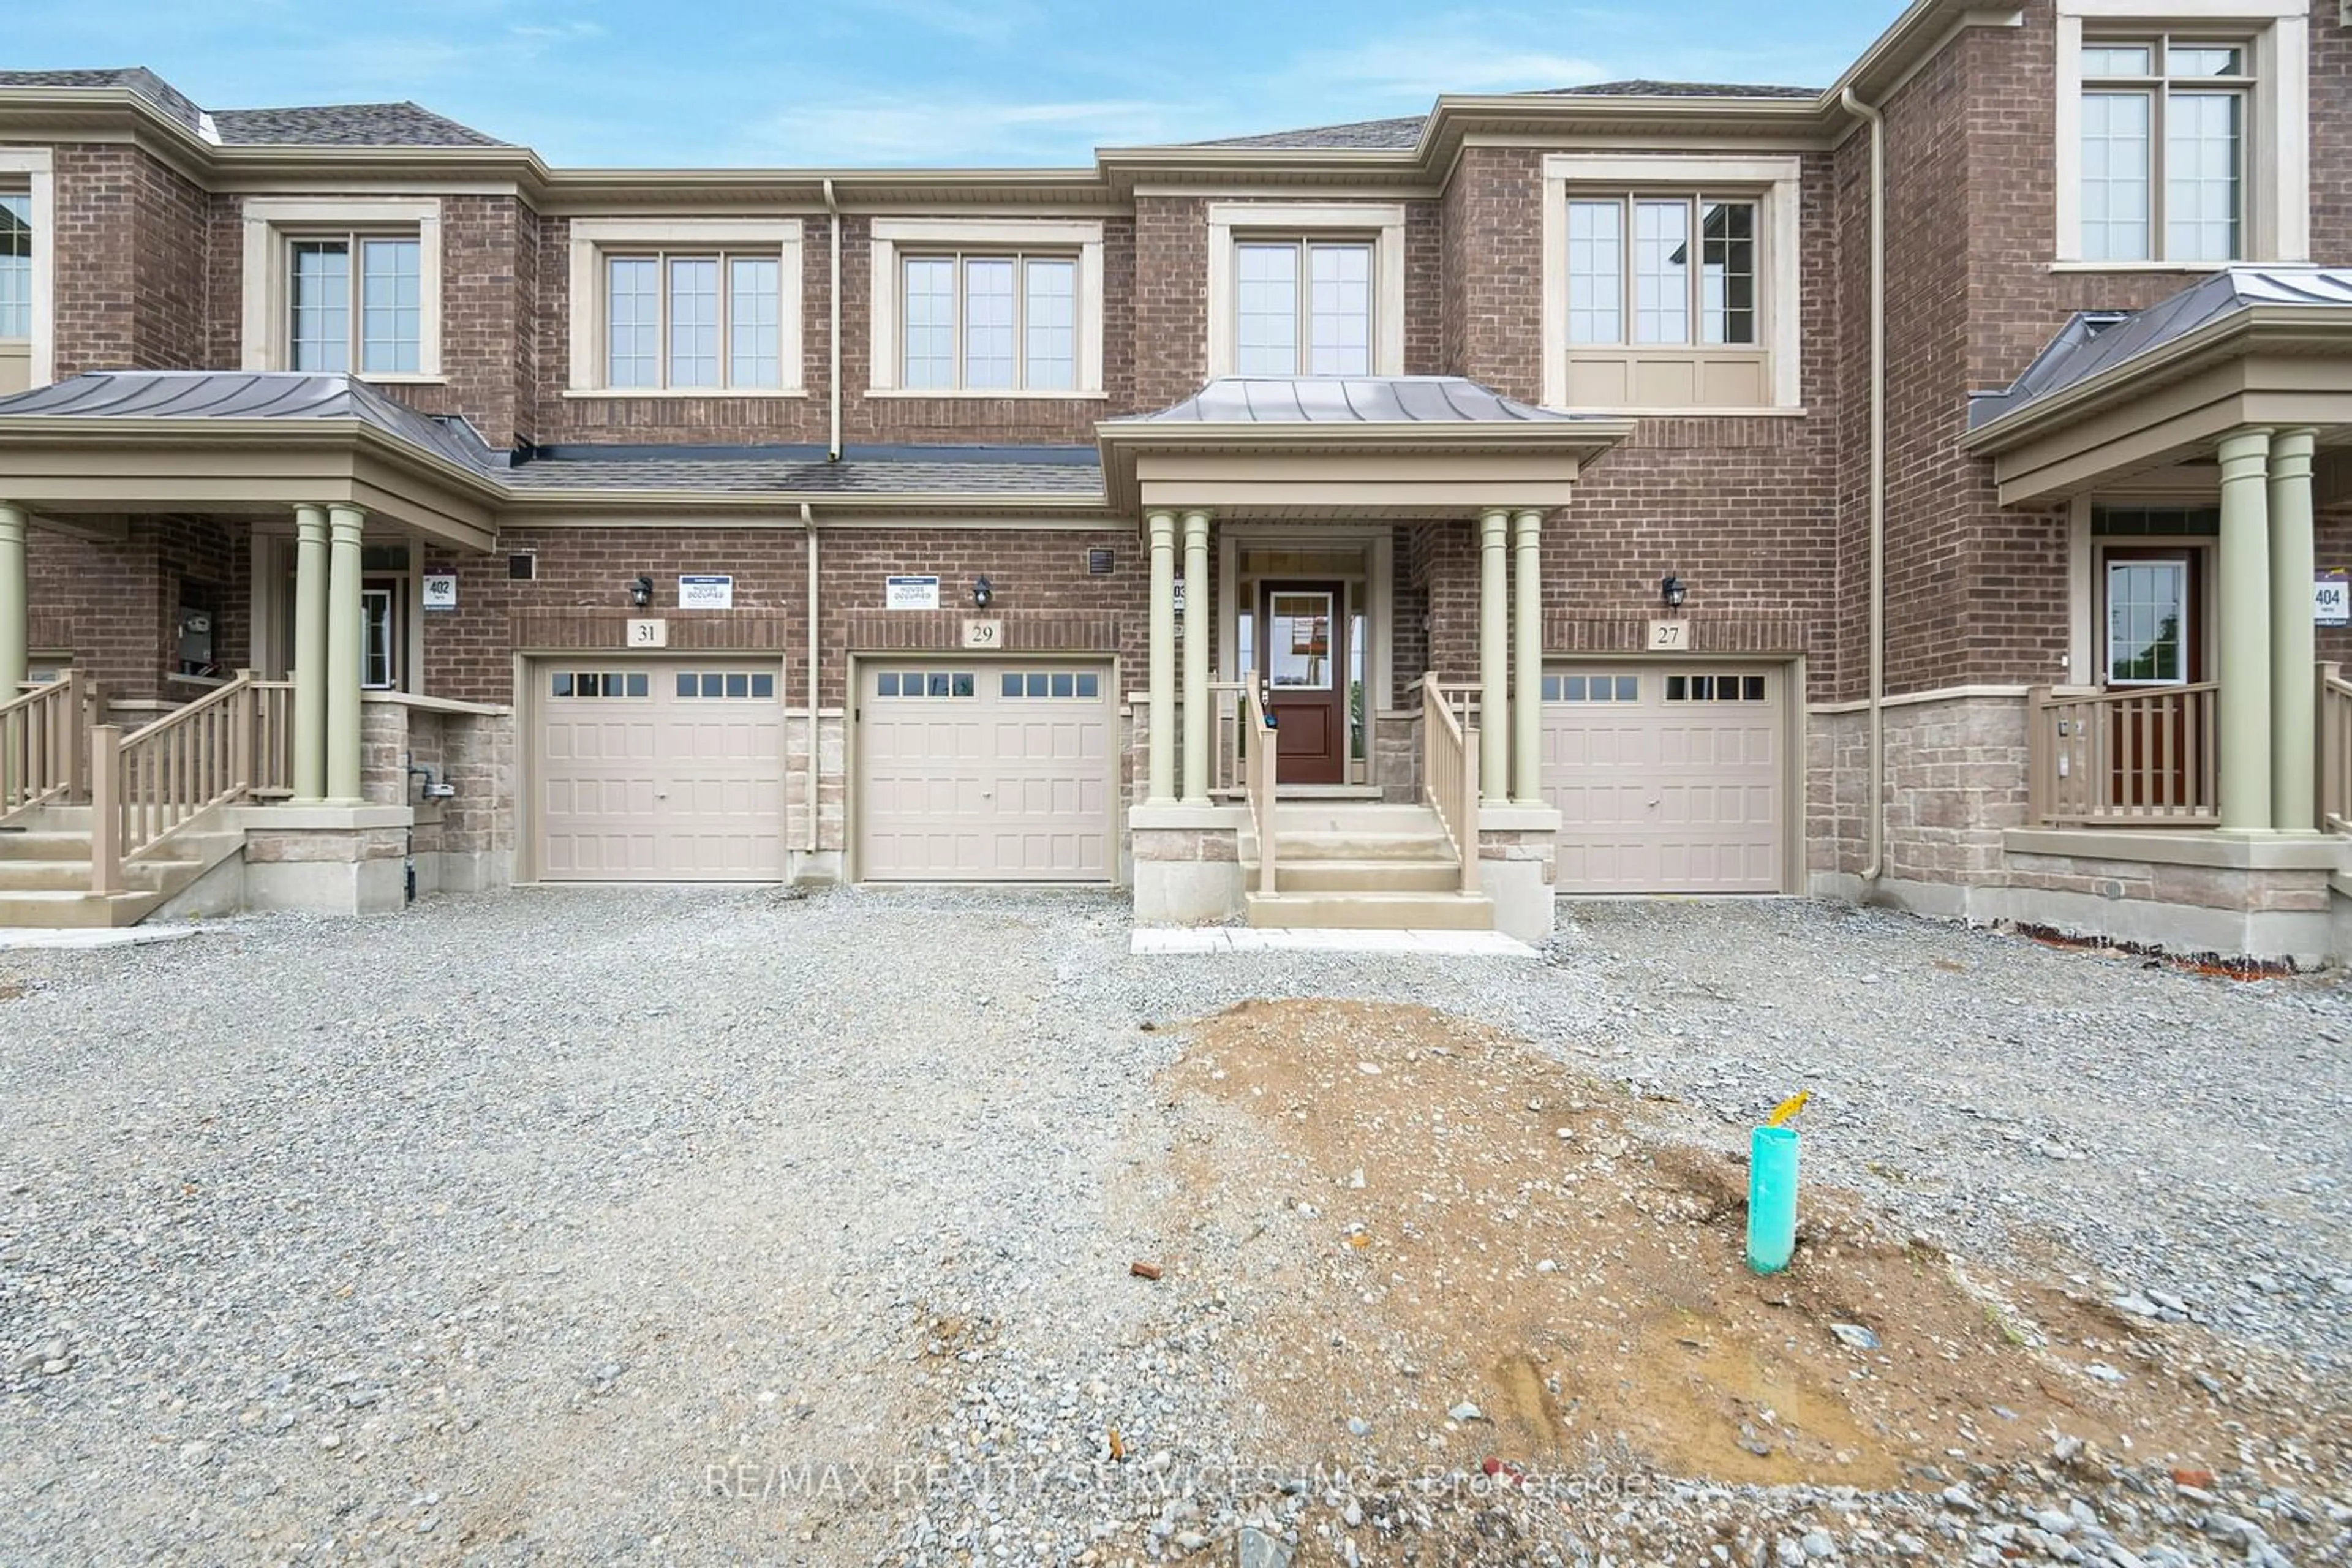 Home with brick exterior material for 29 Bermondsey Way, Brampton Ontario L6Y 0E4